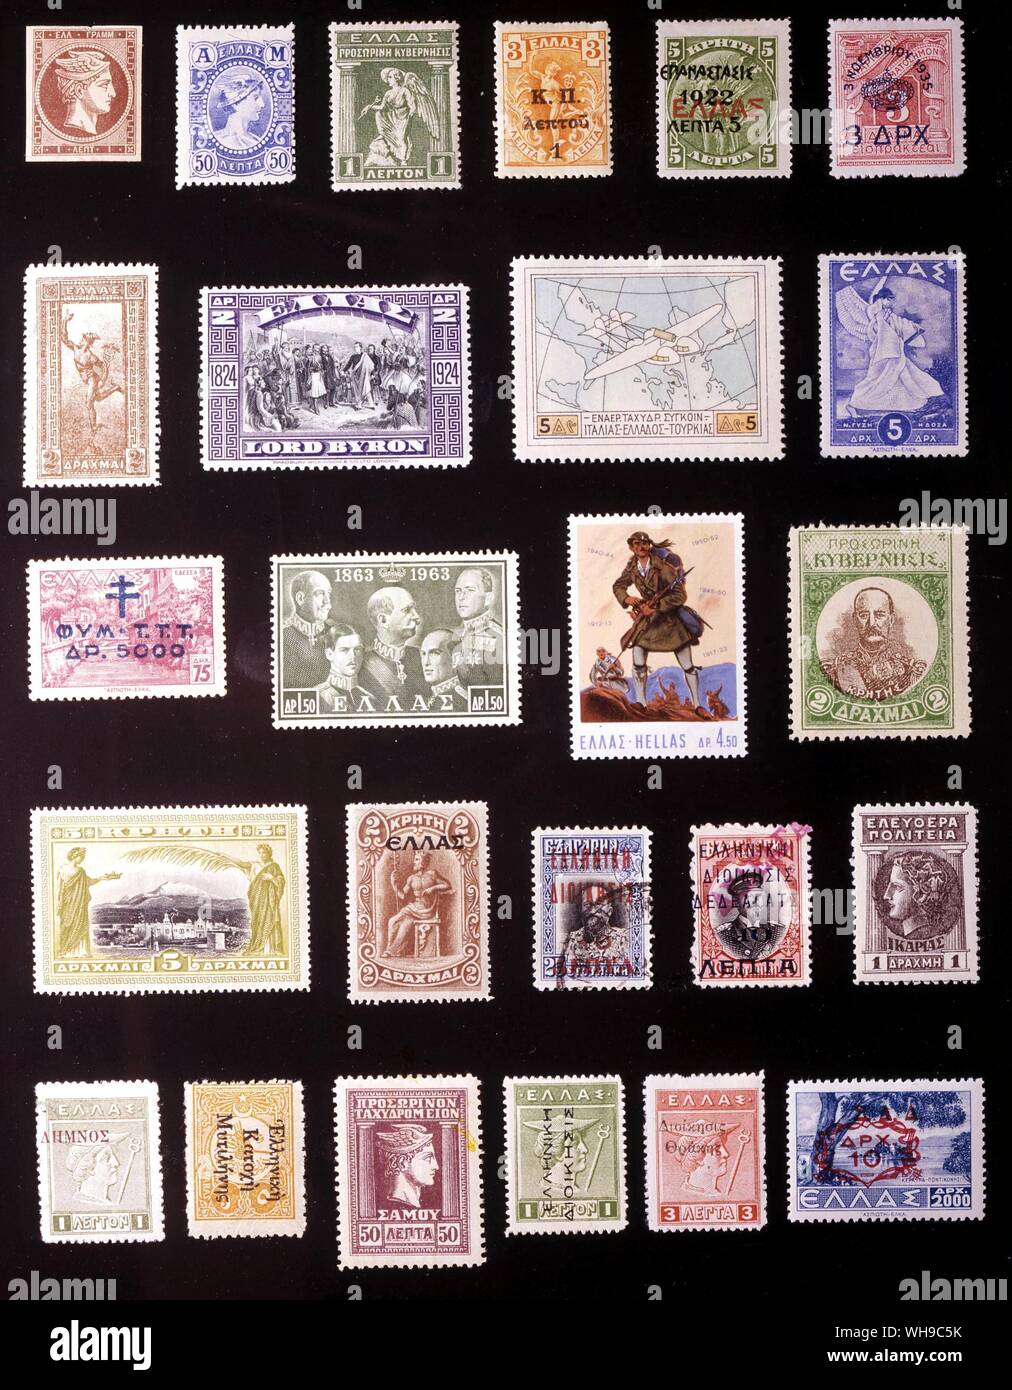 EUROPE - GREECE: (left to right) 1. 1 lepton, 1861, 2. 50 lepta, 1902, 3. Provisional Government, 1 lepton, 1917, 4. 3 + 1 lepta, 1917, 5. 5 lepta, 1923, 6. 3 drachmae, 1935, 7. 2 drachmae, 1901, 8. 2 drachmae, 1924, 9. 5 drachmae, 1926, 10. 5 drachmae, 1937, 11. 5,000 drachmae, 1944, 12. 1.50 drachmae, 1962, 13. 4.50 drachmae, 1968, 14. Crete, 2 drachmae, 1905, 15. Crete, 5 drachmae, 1905, 16. Crete, 2 drachmae, 1908, 17. Cavalla, 10 lepta, 1913, 18. Dedeagatz, 10 lepta, 1913, 19. Icaria, 1 drachma, 1912, 20. Lemnos, 1 lepton, 1912, 21. Mytilene, 5 paras, 1912, 22. Samos, 50 lepta, 1912, 23. Stock Photo